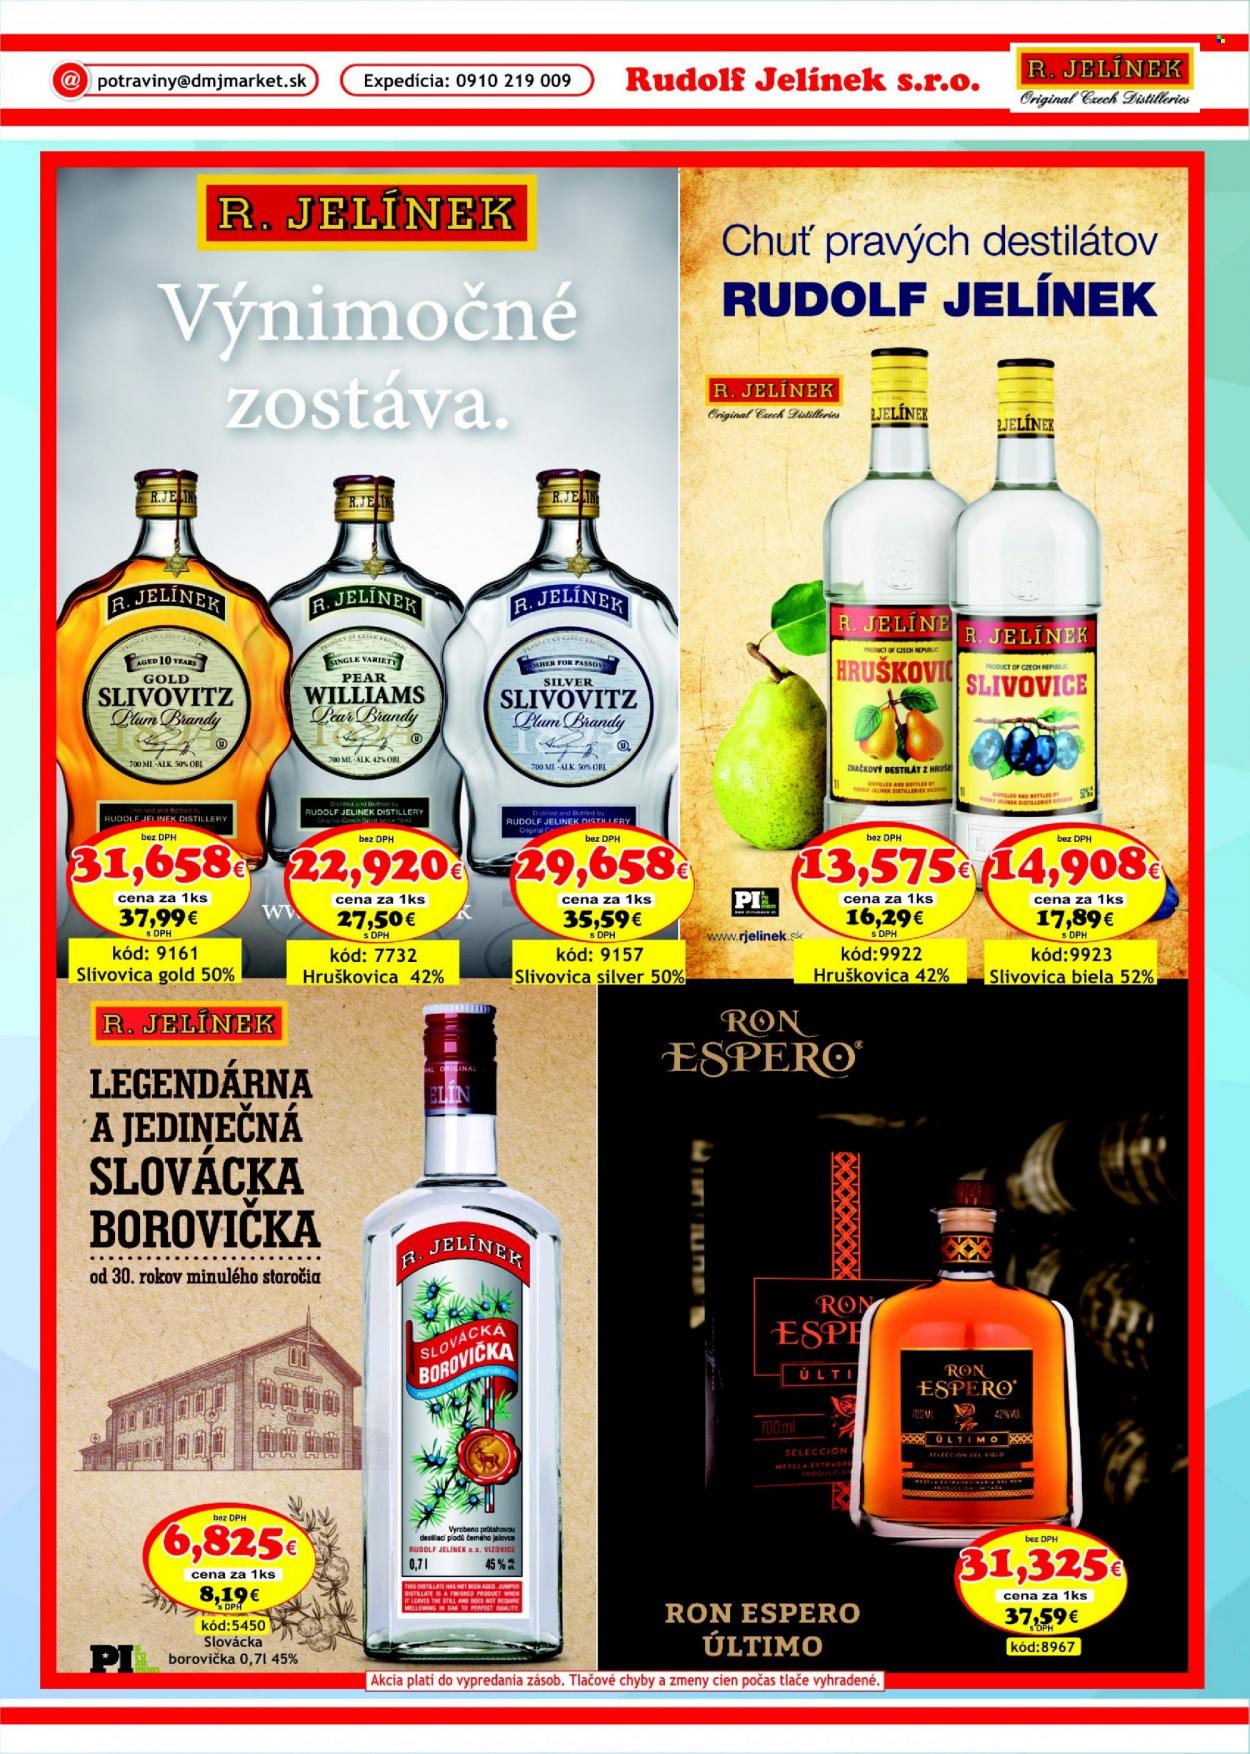 thumbnail - Leták DMJ market - Produkty v akcii - alkohol, borovička, brandy, slivovica, R. Jelínek, hruškovica, Espero, Cien. Strana 43.